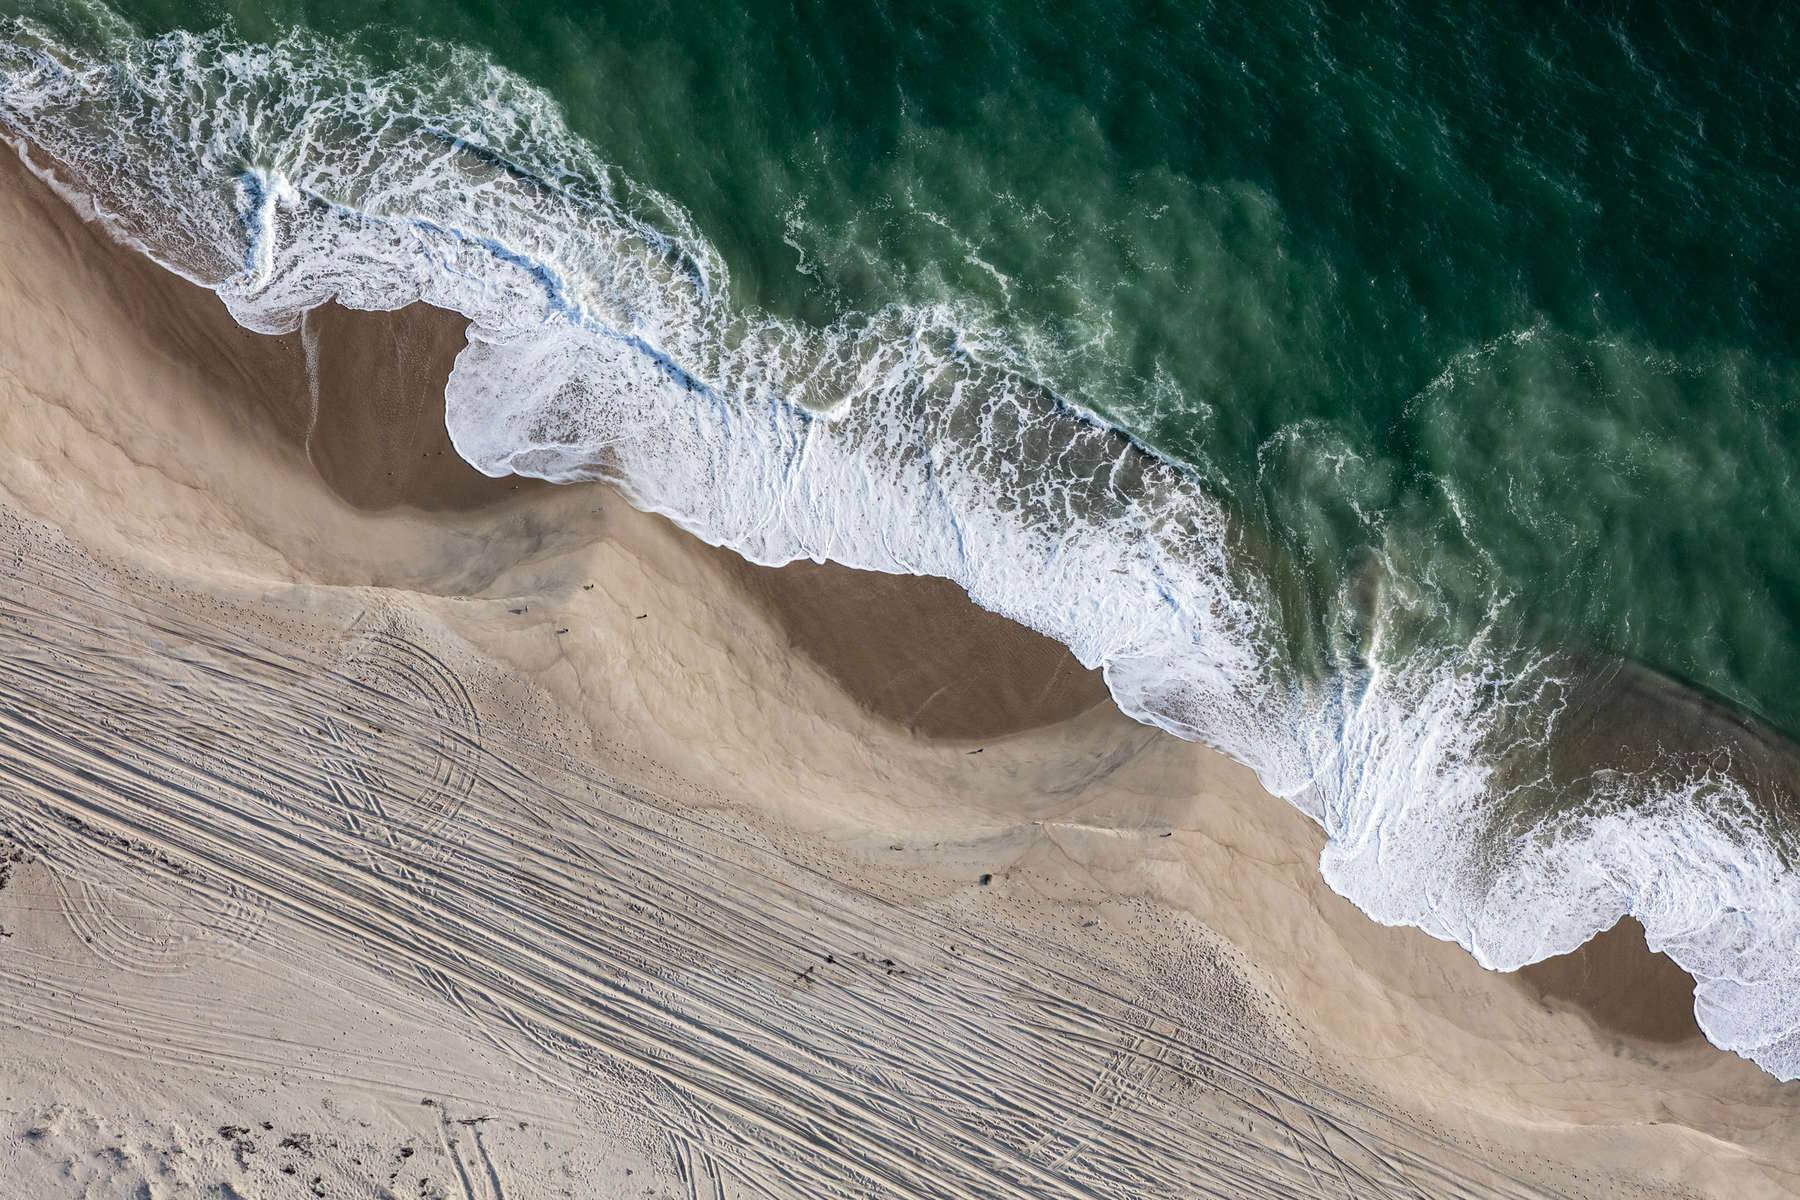 Shoreline Waves at Smith's Point, Nantucket, Massachusetts 2018 (180930-0404)